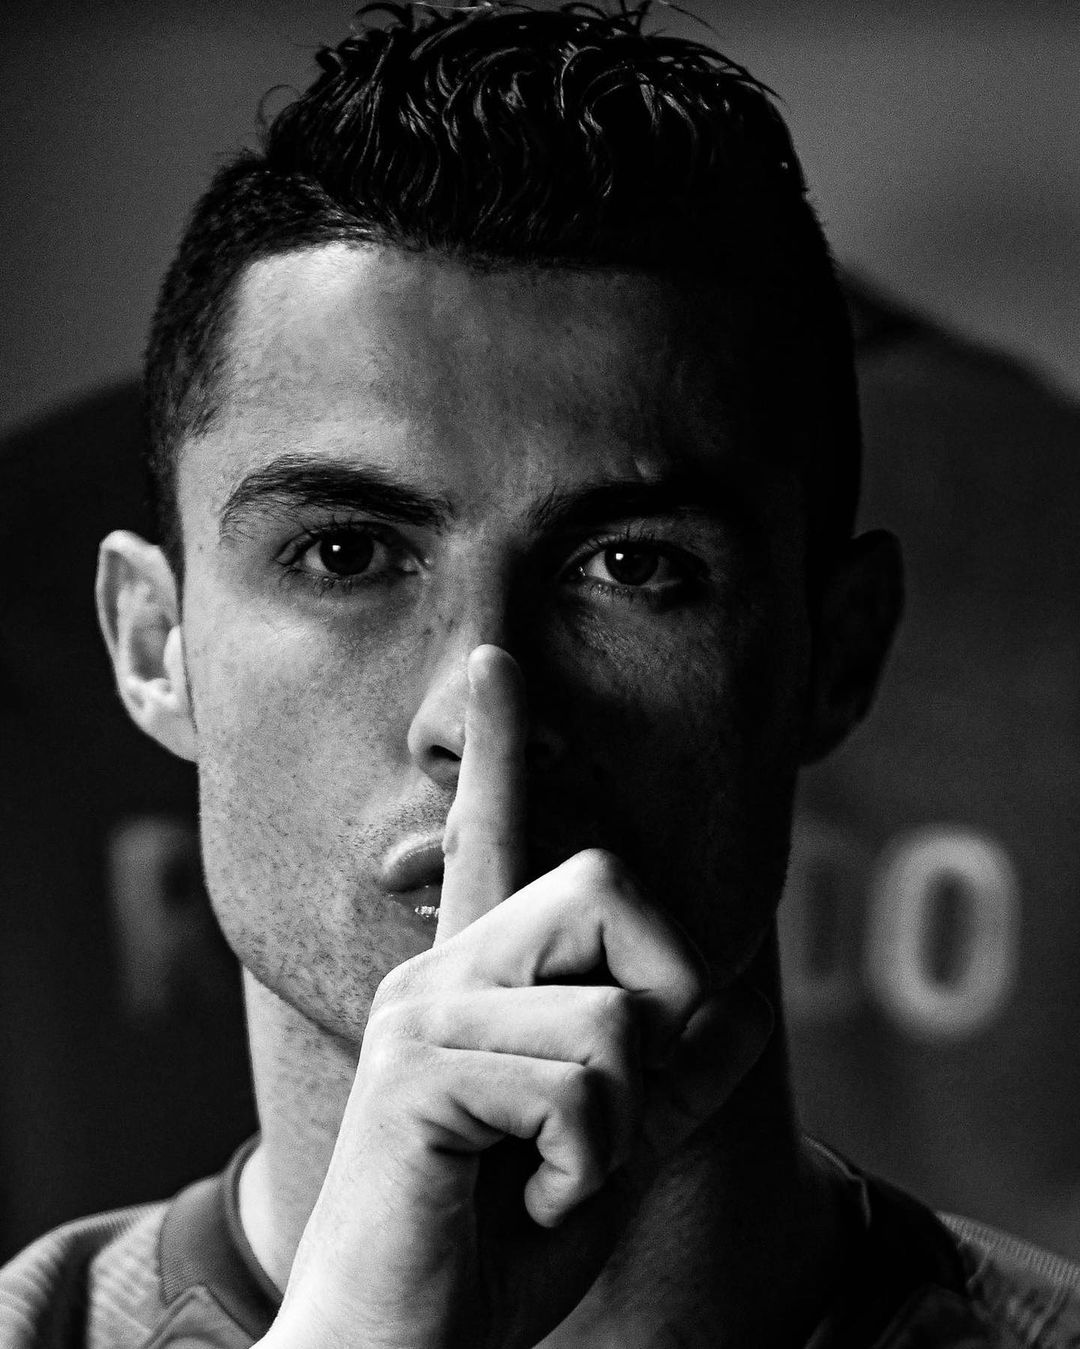 Cristiano Ronaldo Breaks Silence On His Future, Addresses "Disrespectful Rumours"